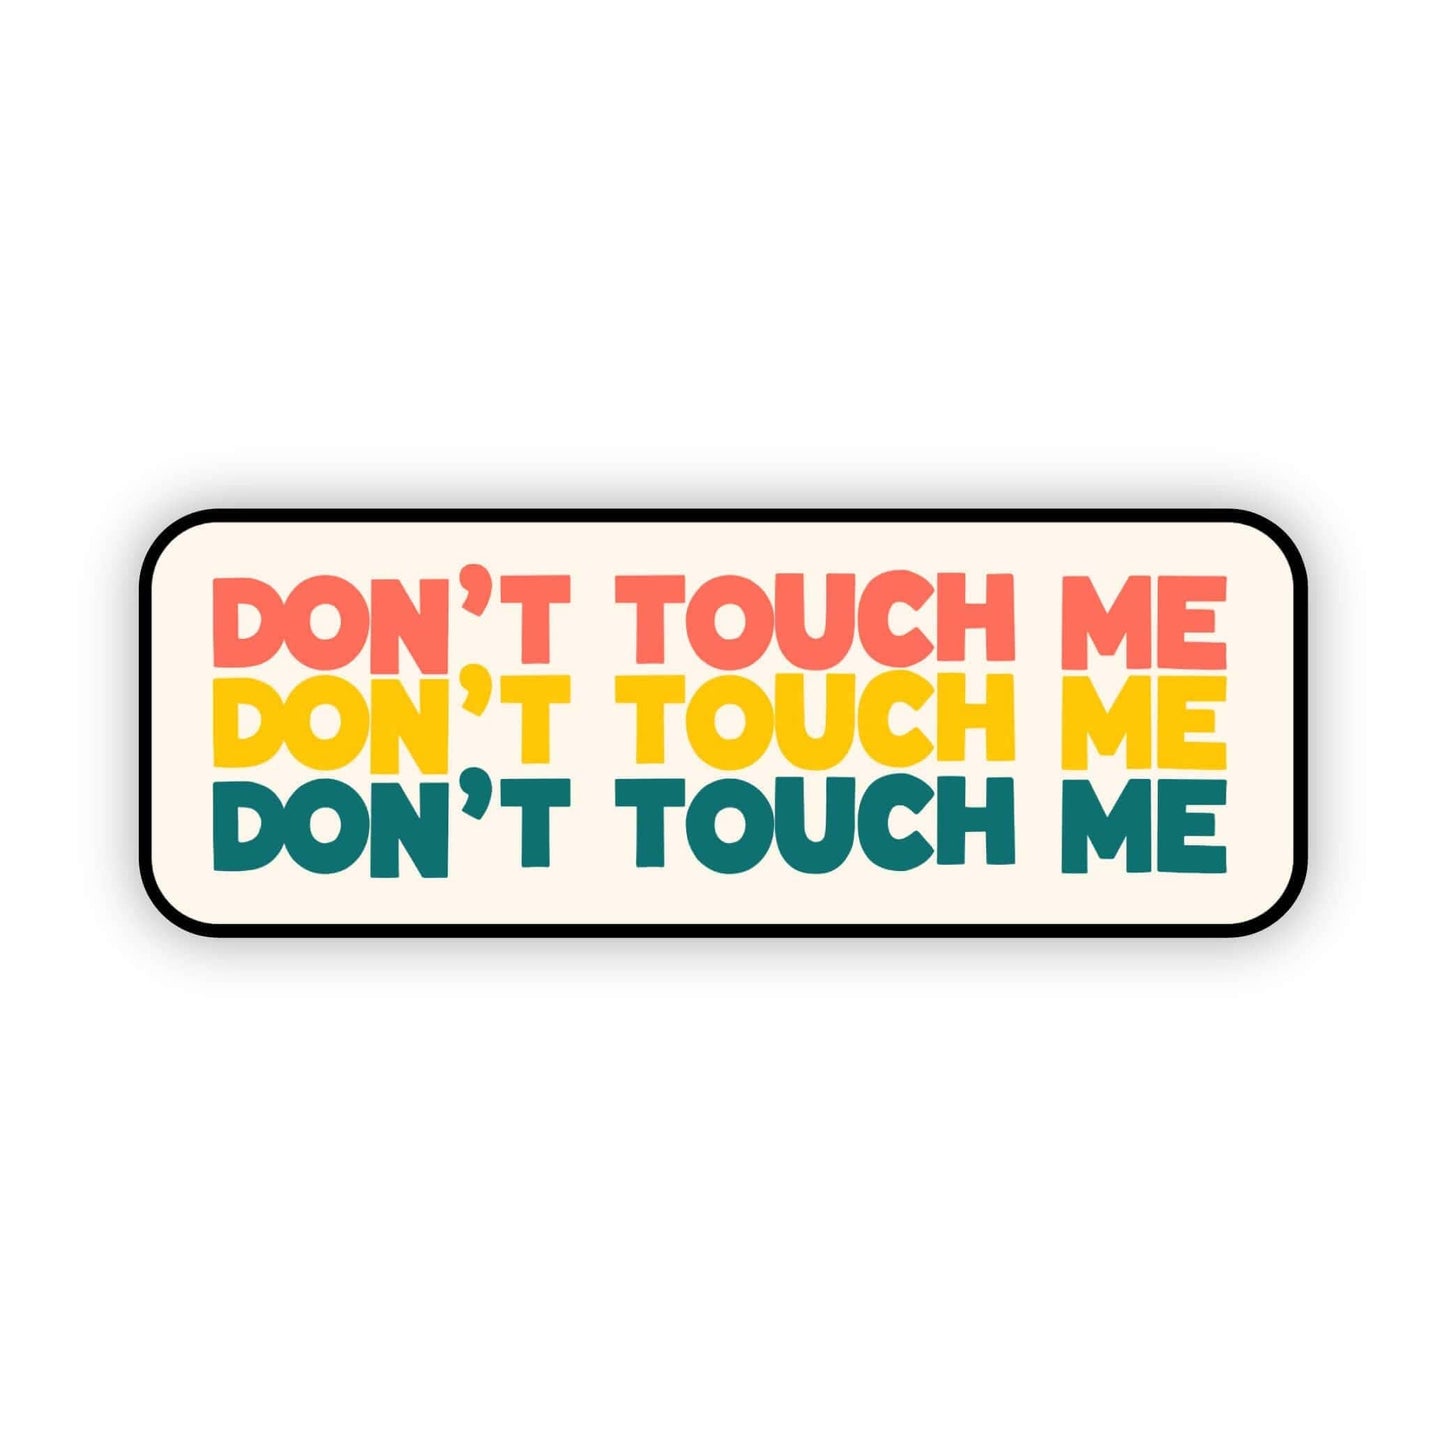 Don't touch me sarcasm sticker